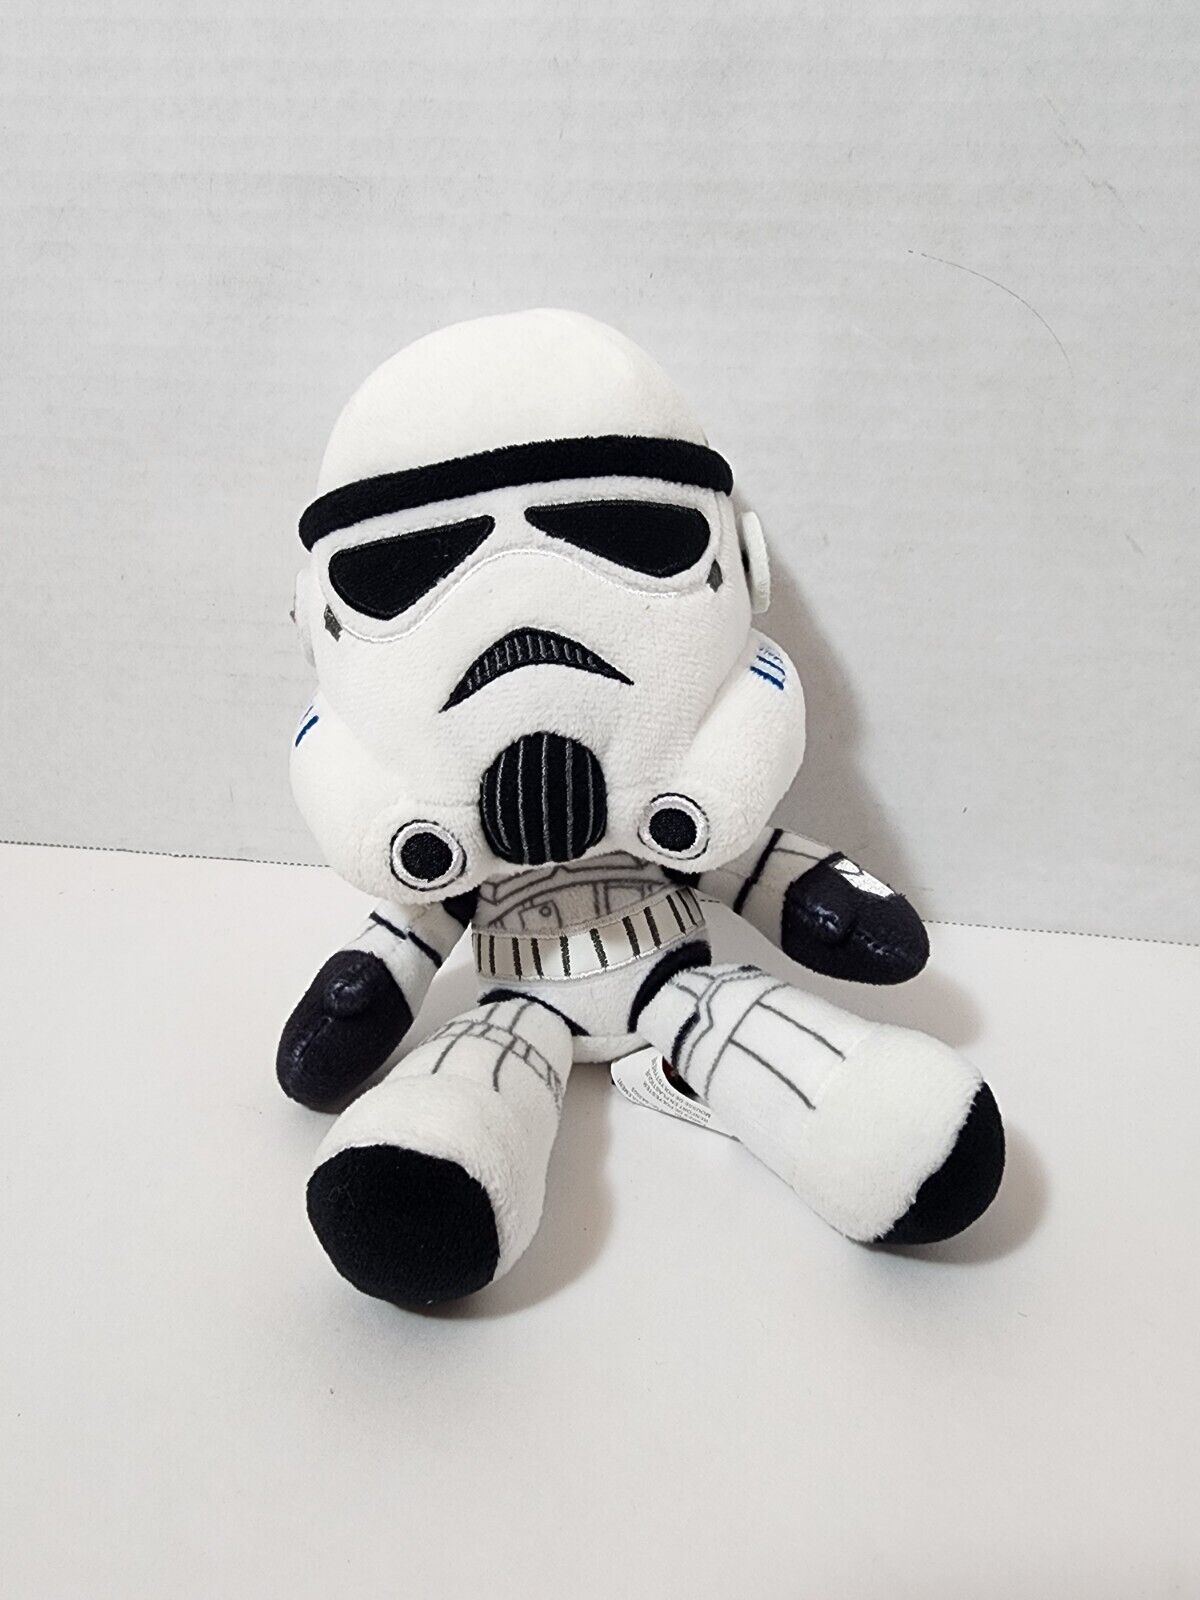 Star Wars Stormtrooper 8 Inch Plush Figure 2021 Mattel White and Black